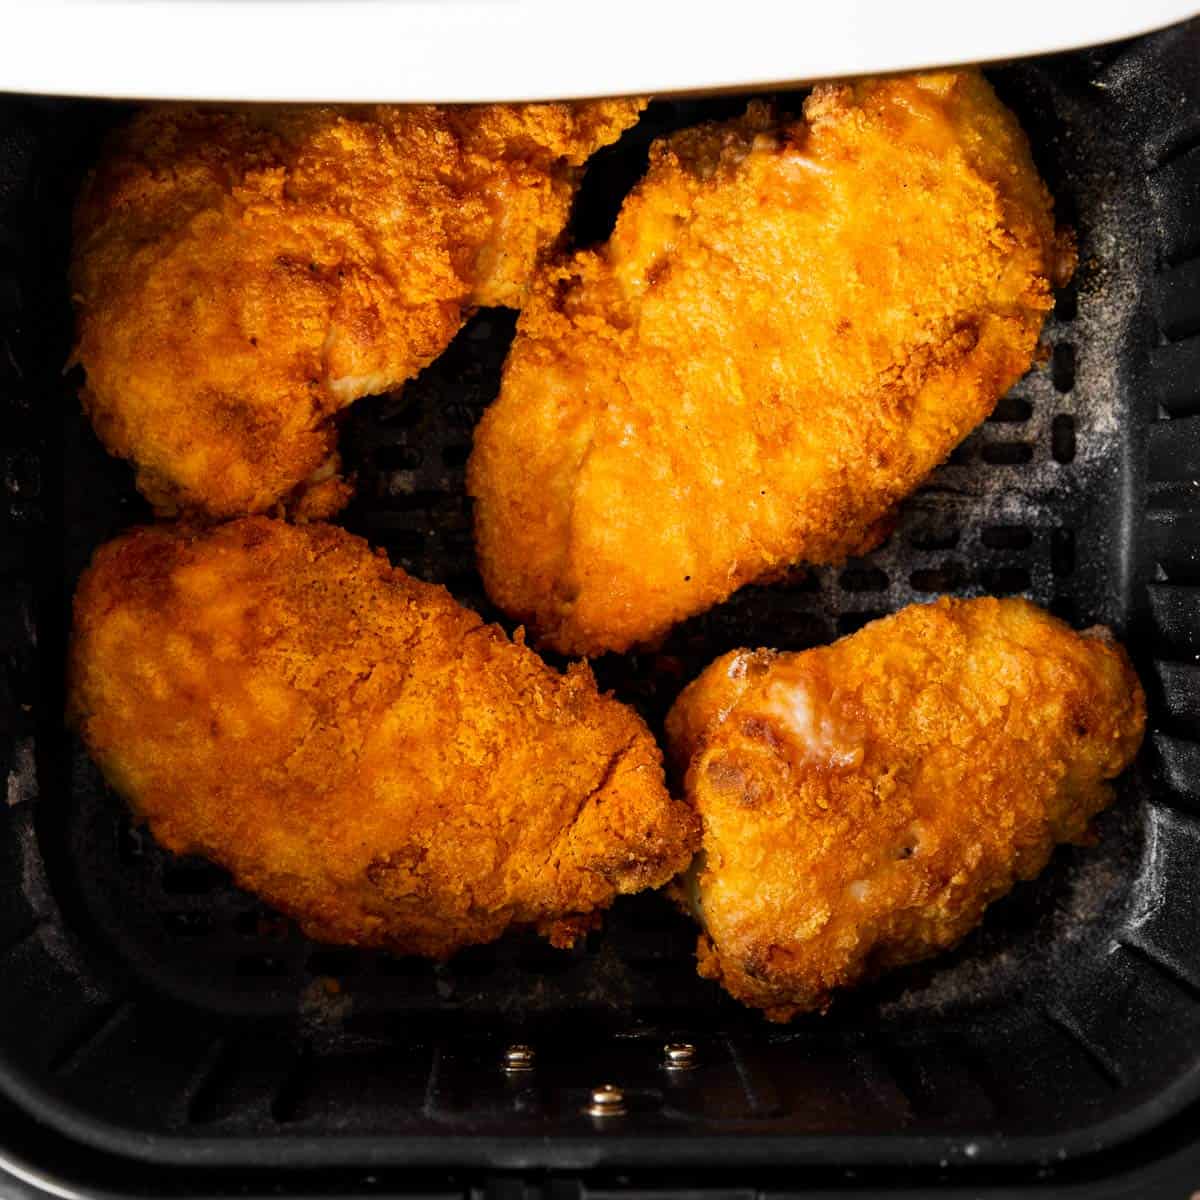 https://www.savorynothings.com/wp-content/uploads/2021/03/air-fryer-fried-chicken-sq.jpg